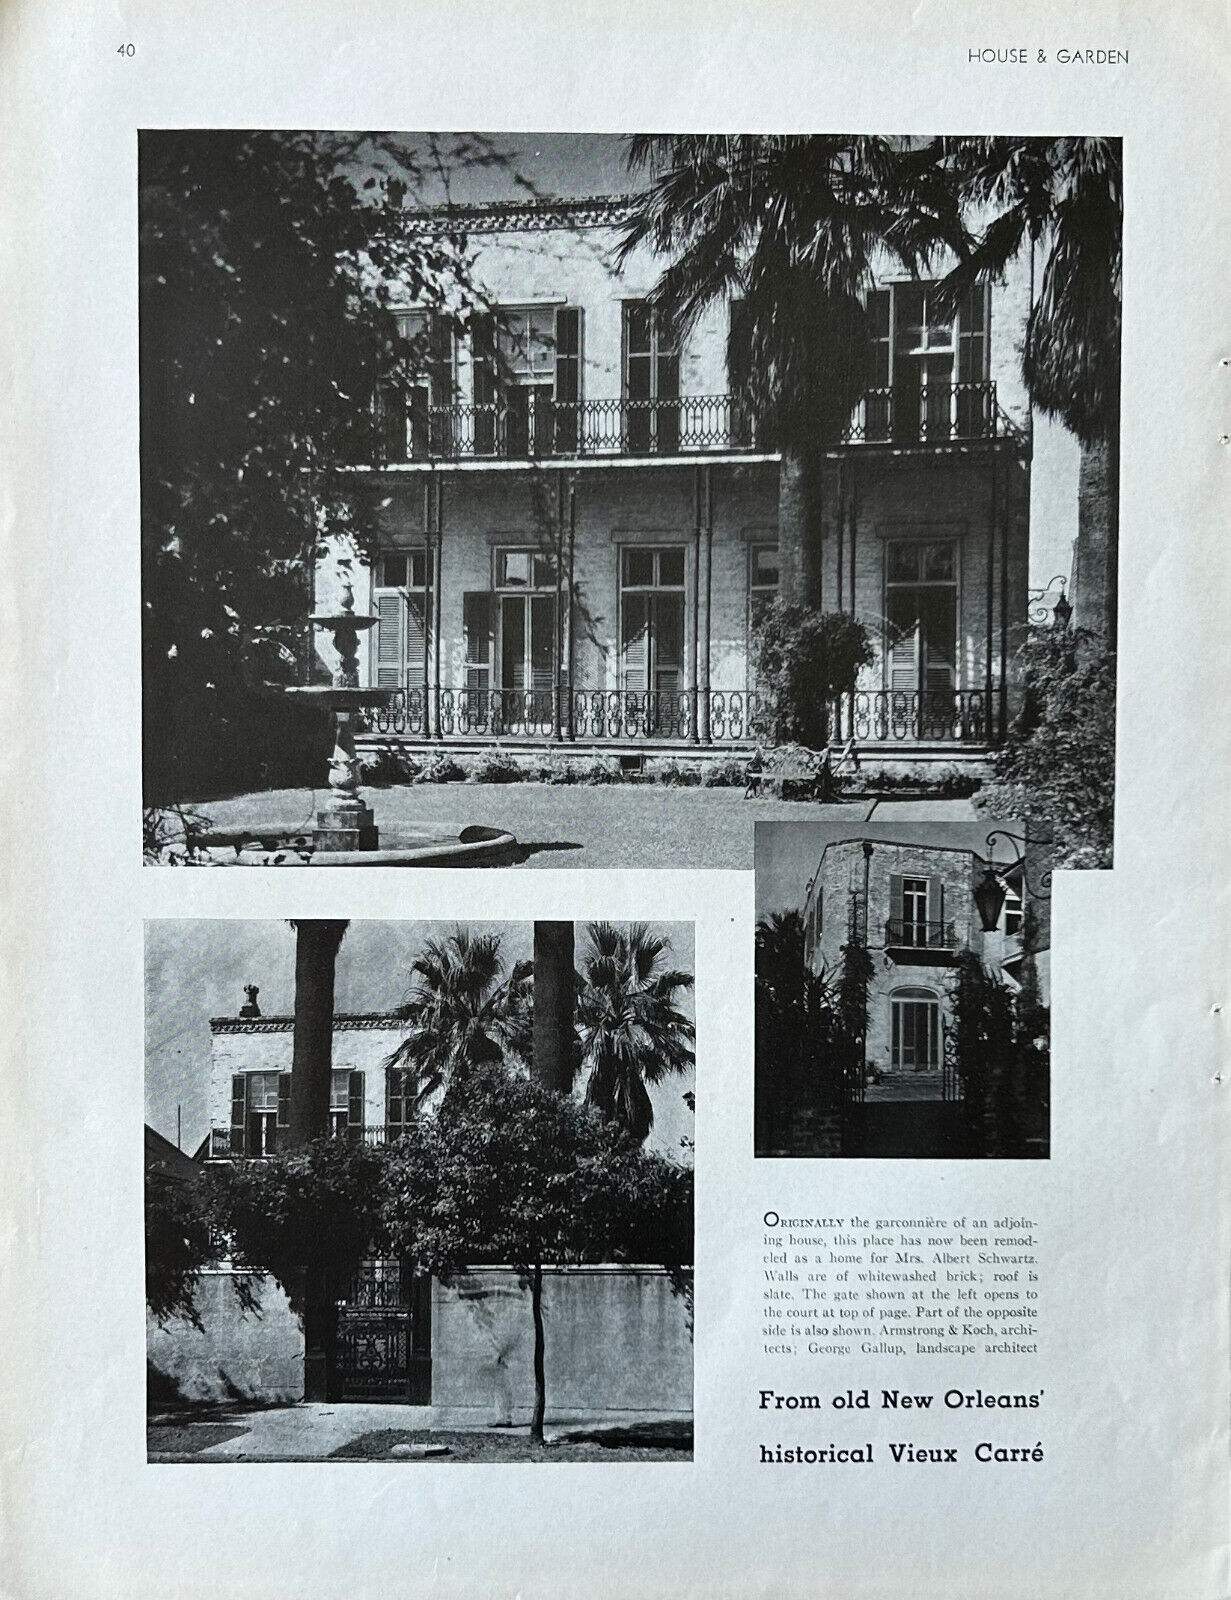 Mrs. Albert Schwartz Home 1932 New Orleans LA French Quarter Armstrong & Koch